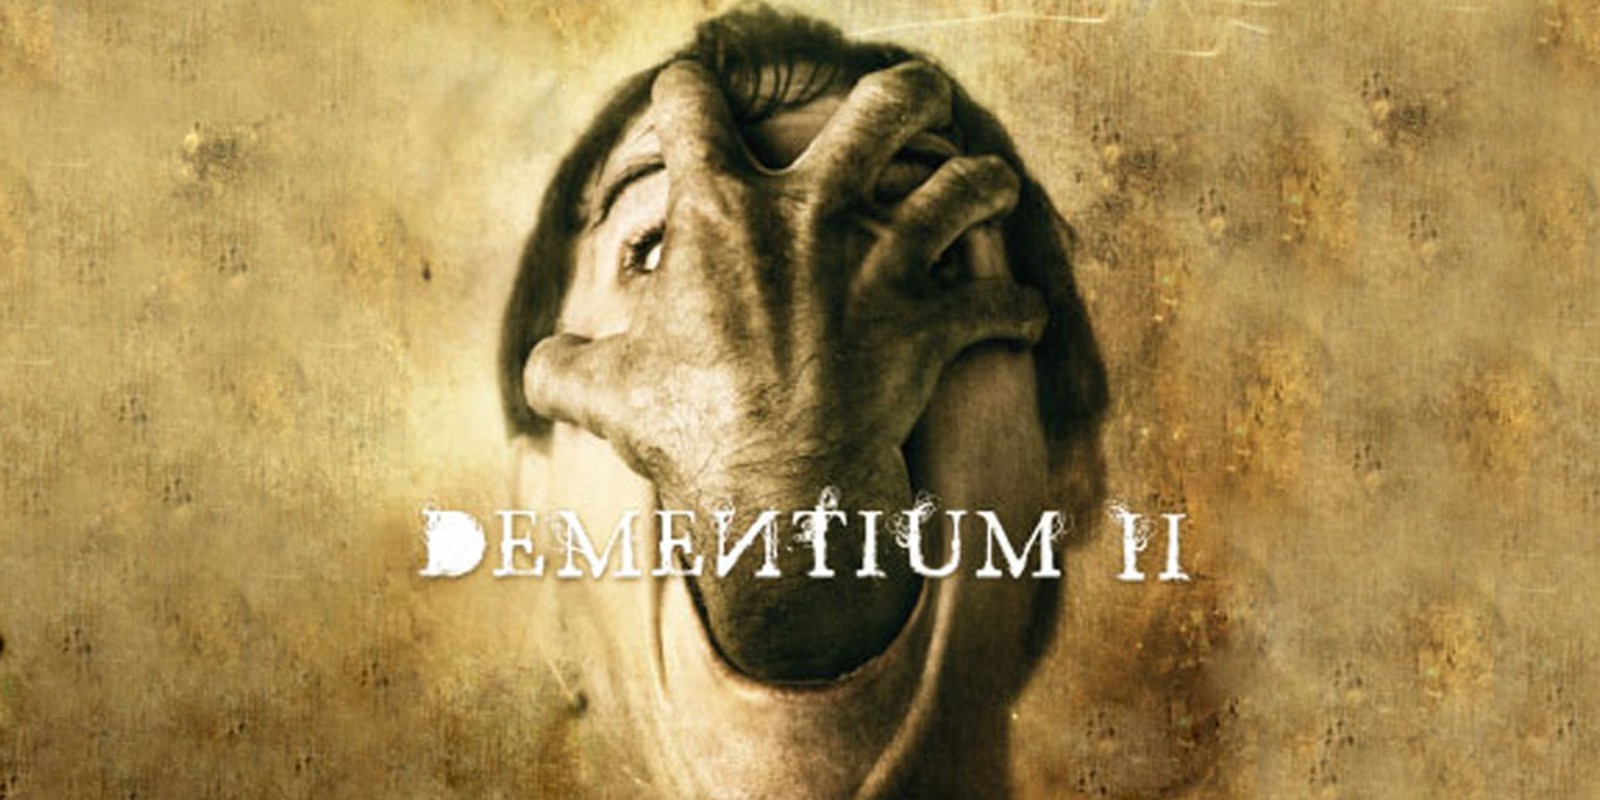 dementium ii hd download